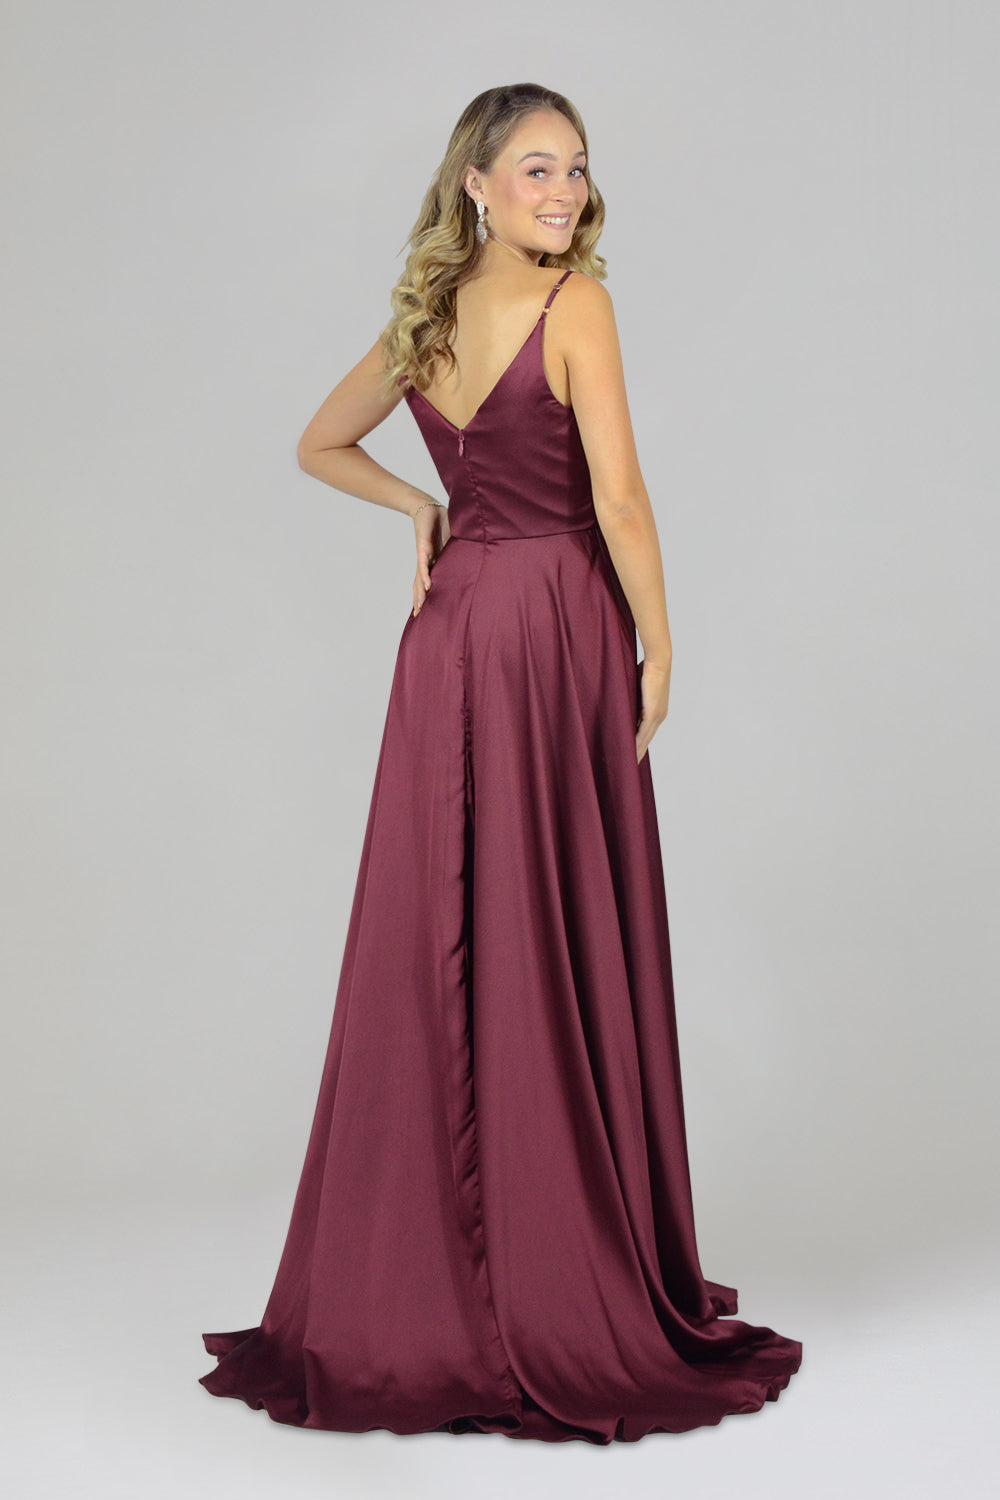 burgundy bridesmaid dresses australia custom made to order envious bridal & formal